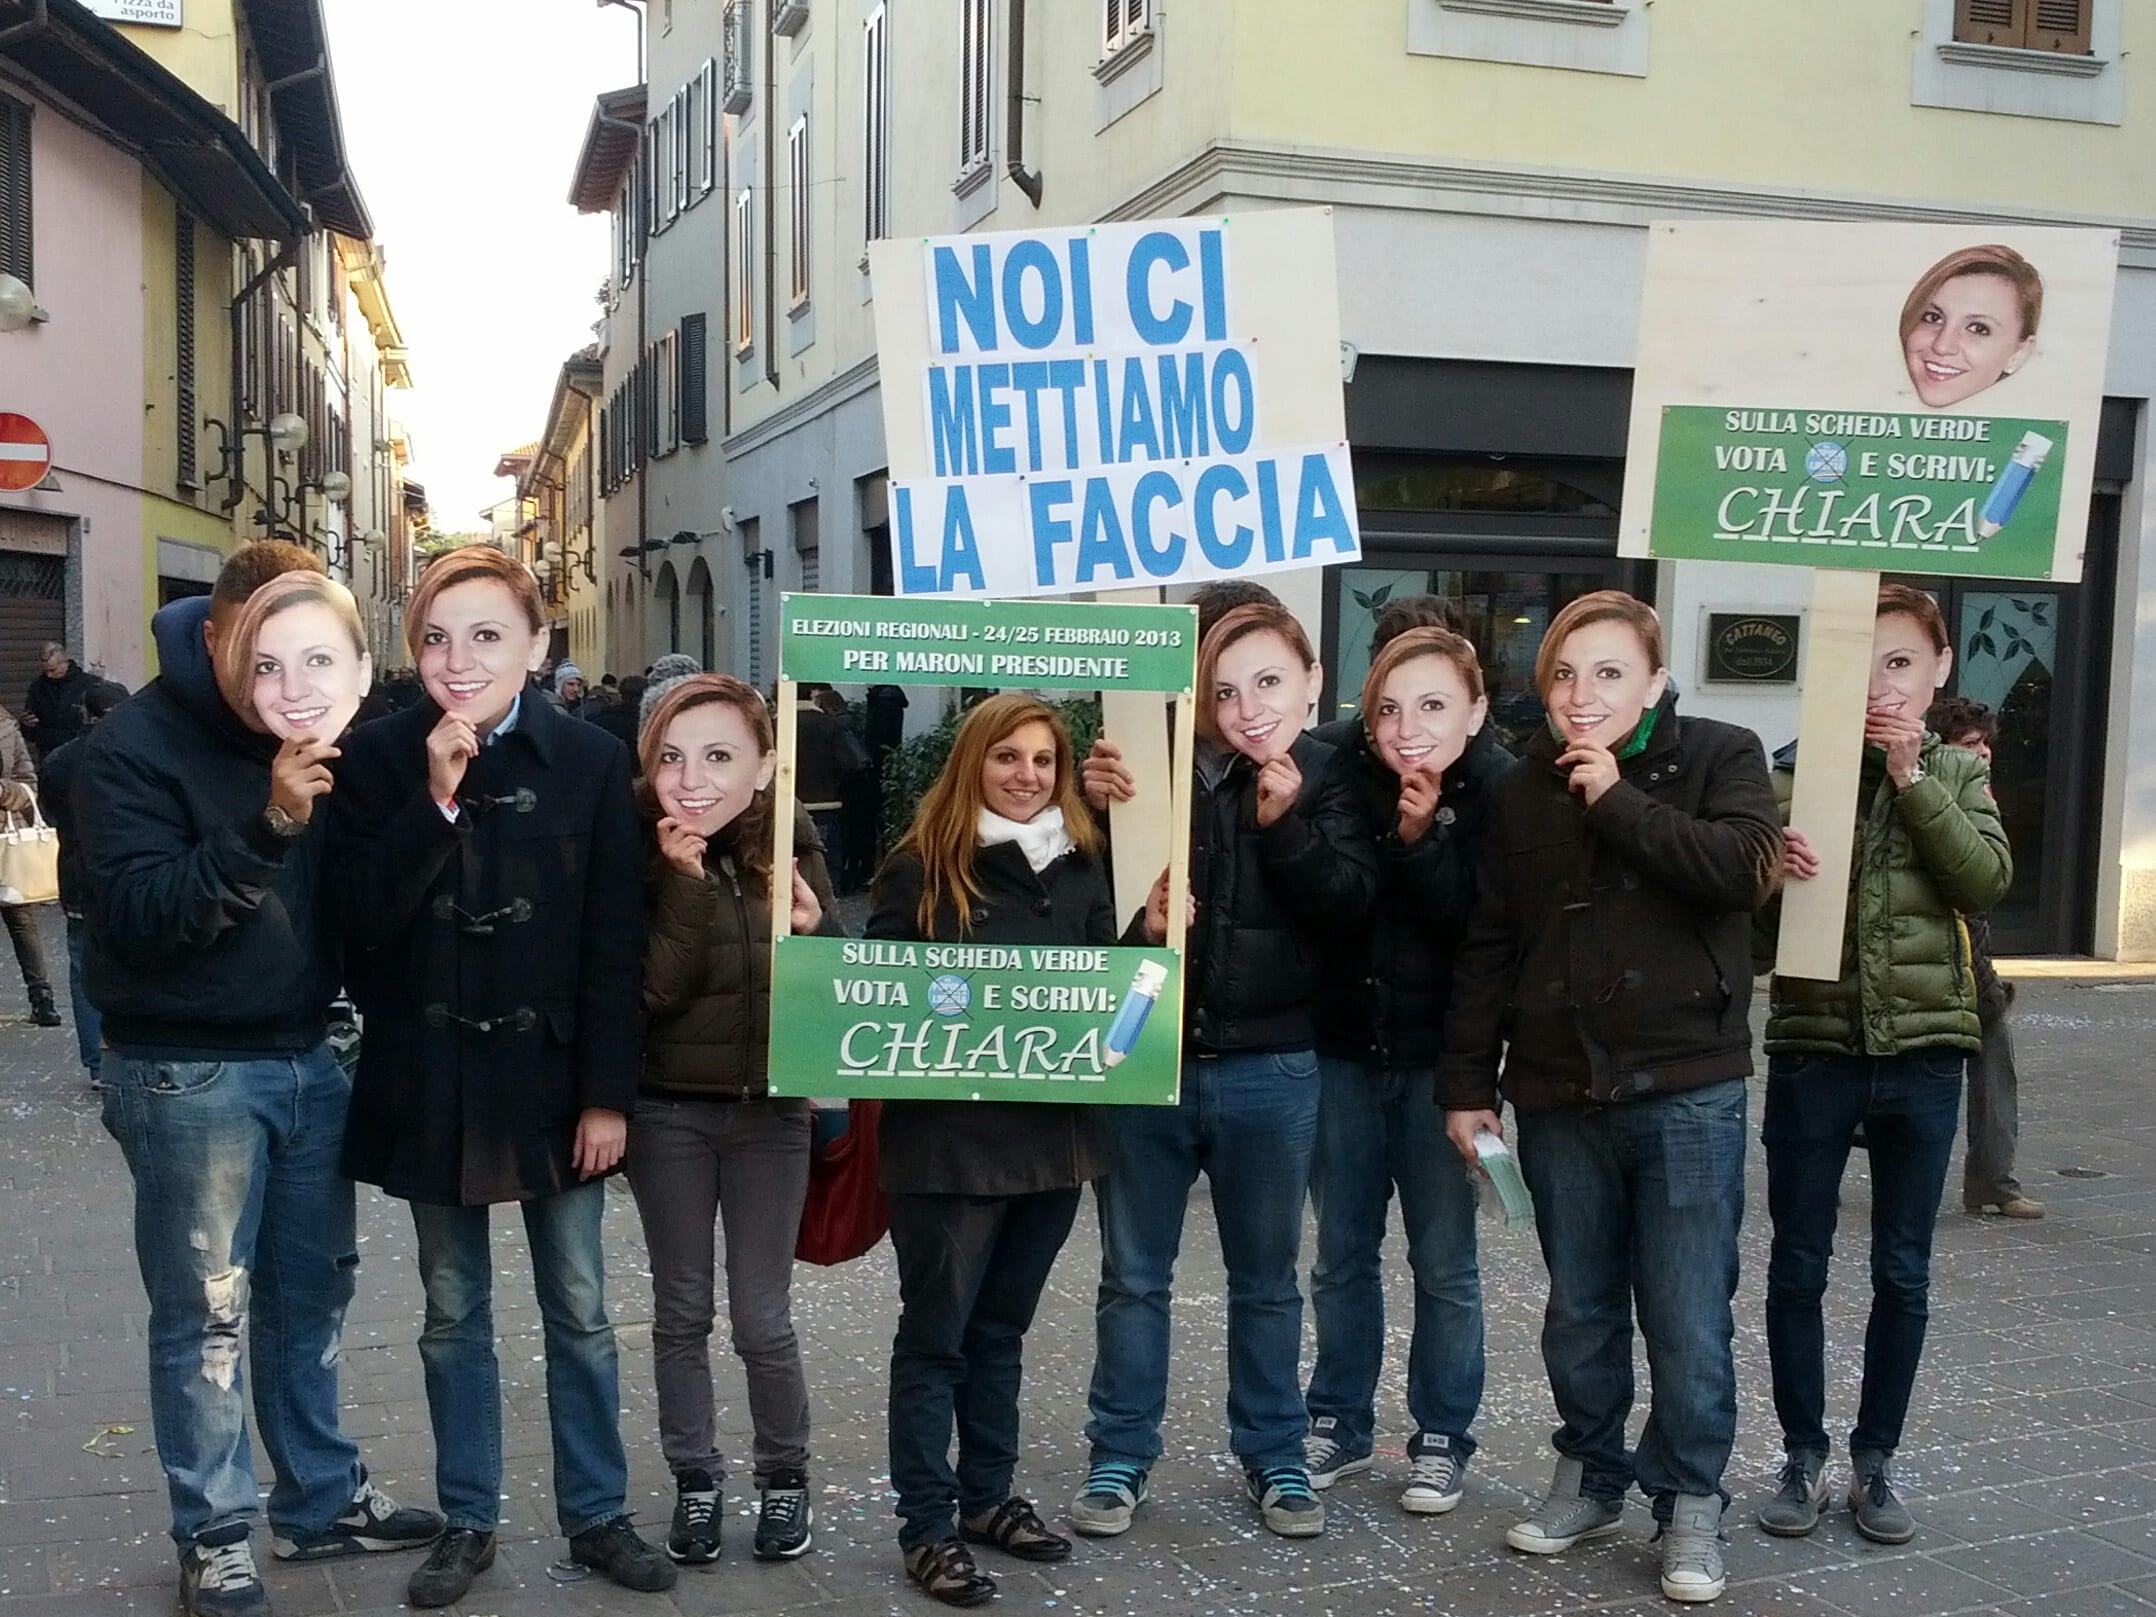 Chiara Favaloro, flash mob “noi ci mettiamo la faccia”